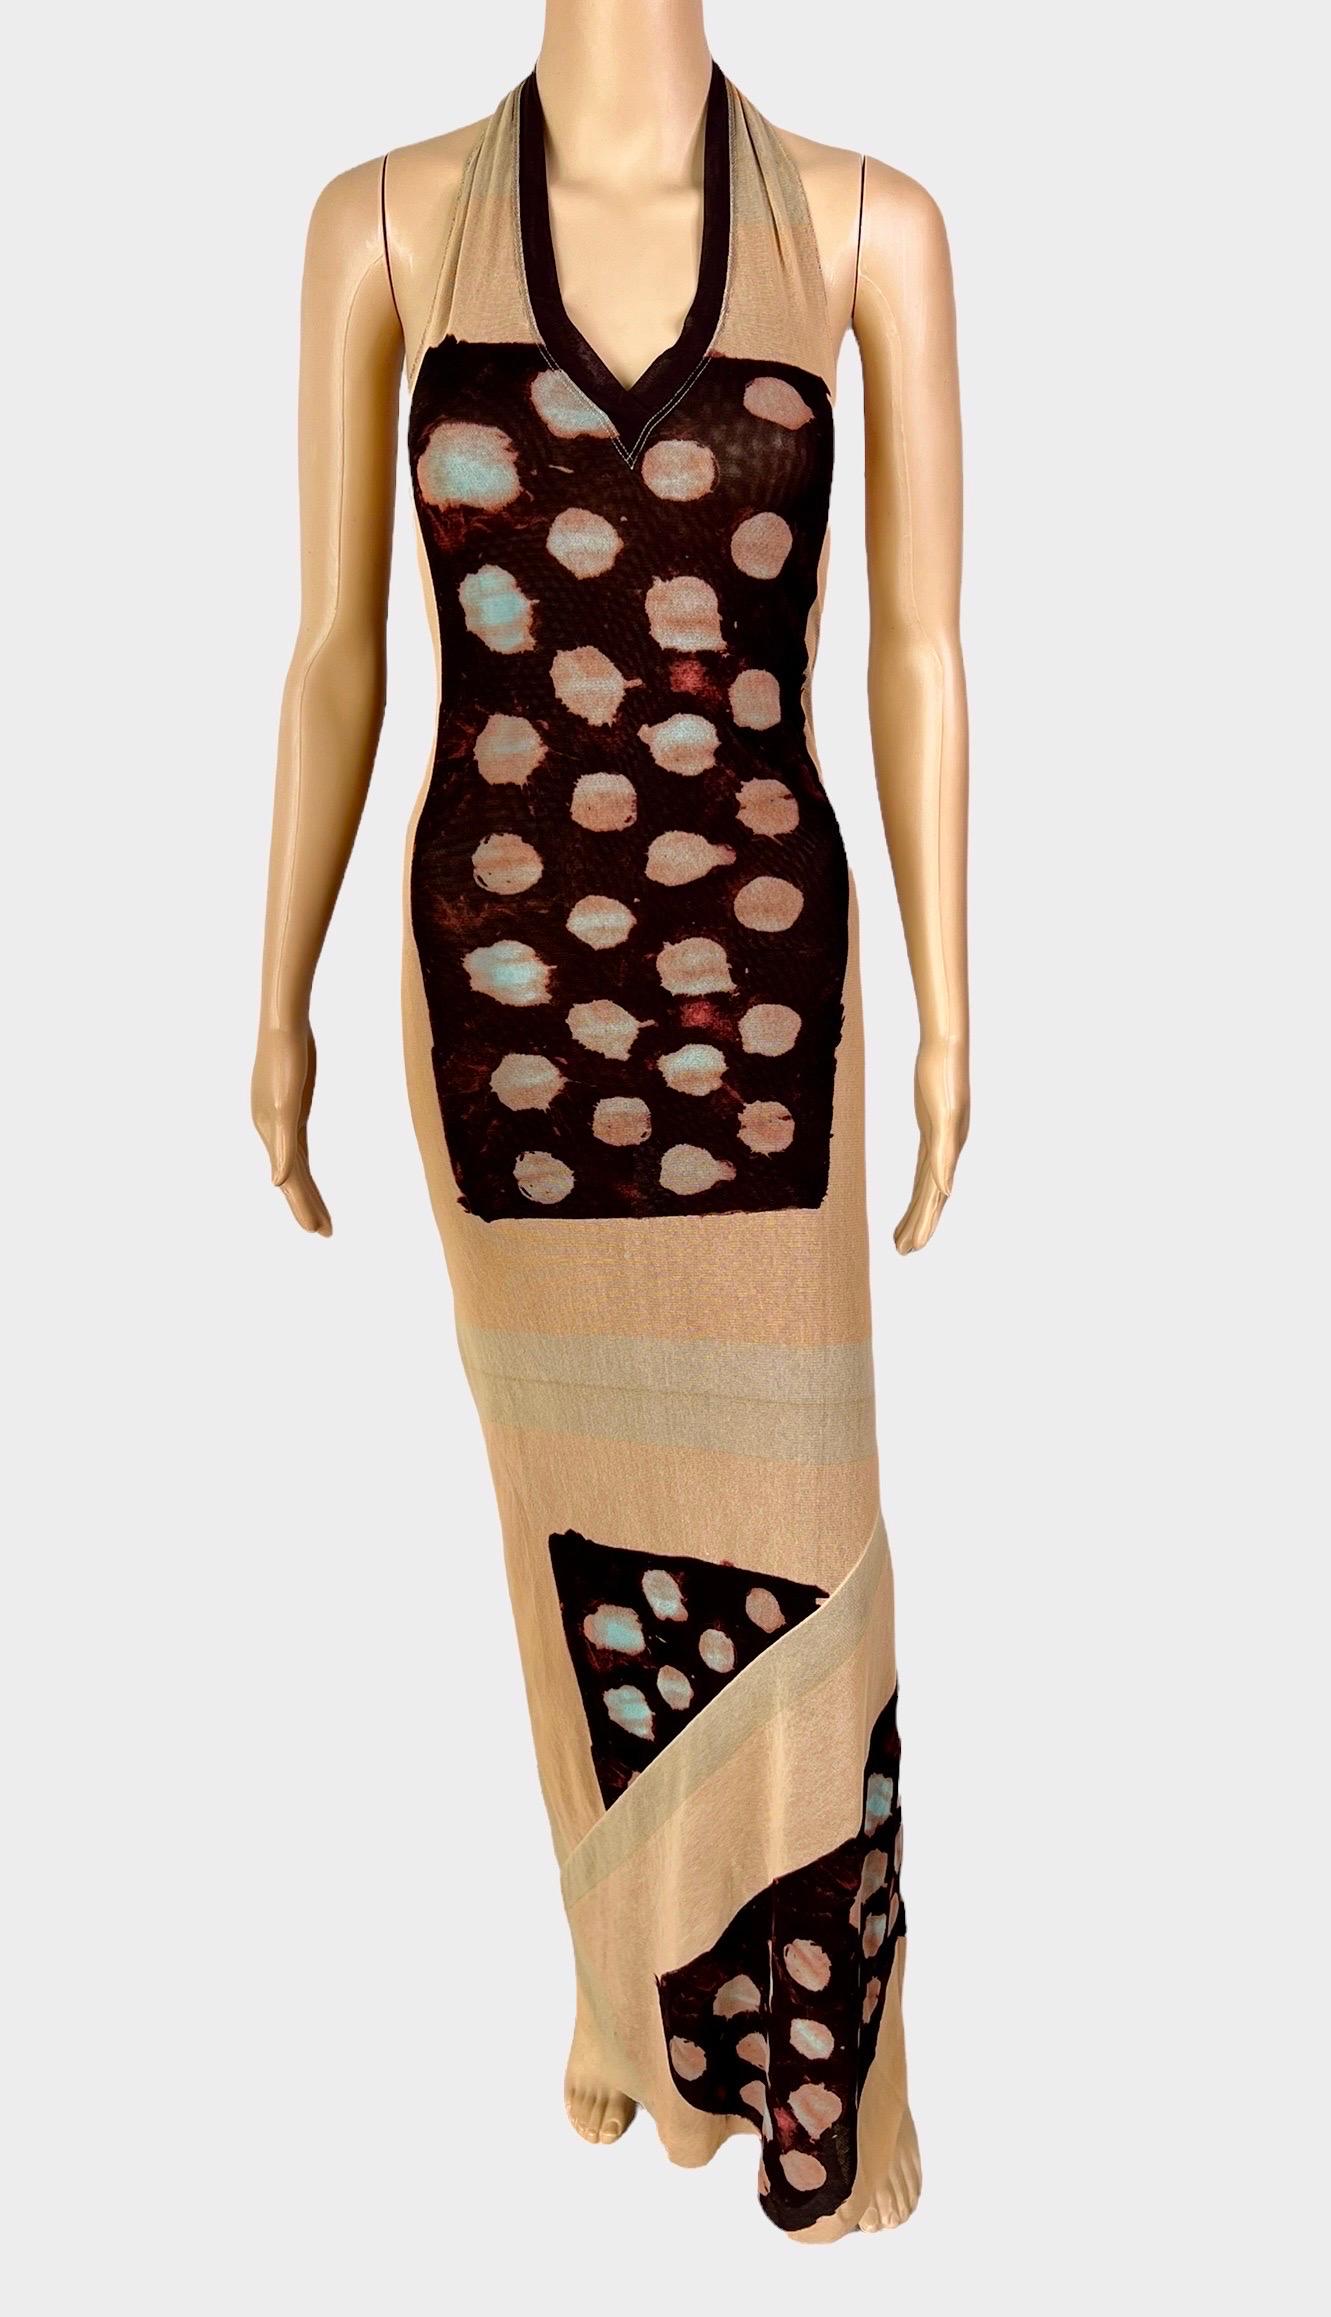 Jean Paul Gaultier S/S 2001 Sheer Mesh Abstract Polka Dot Print Cardigan Top & Maxi Dress 2 Piece Set

Size M

